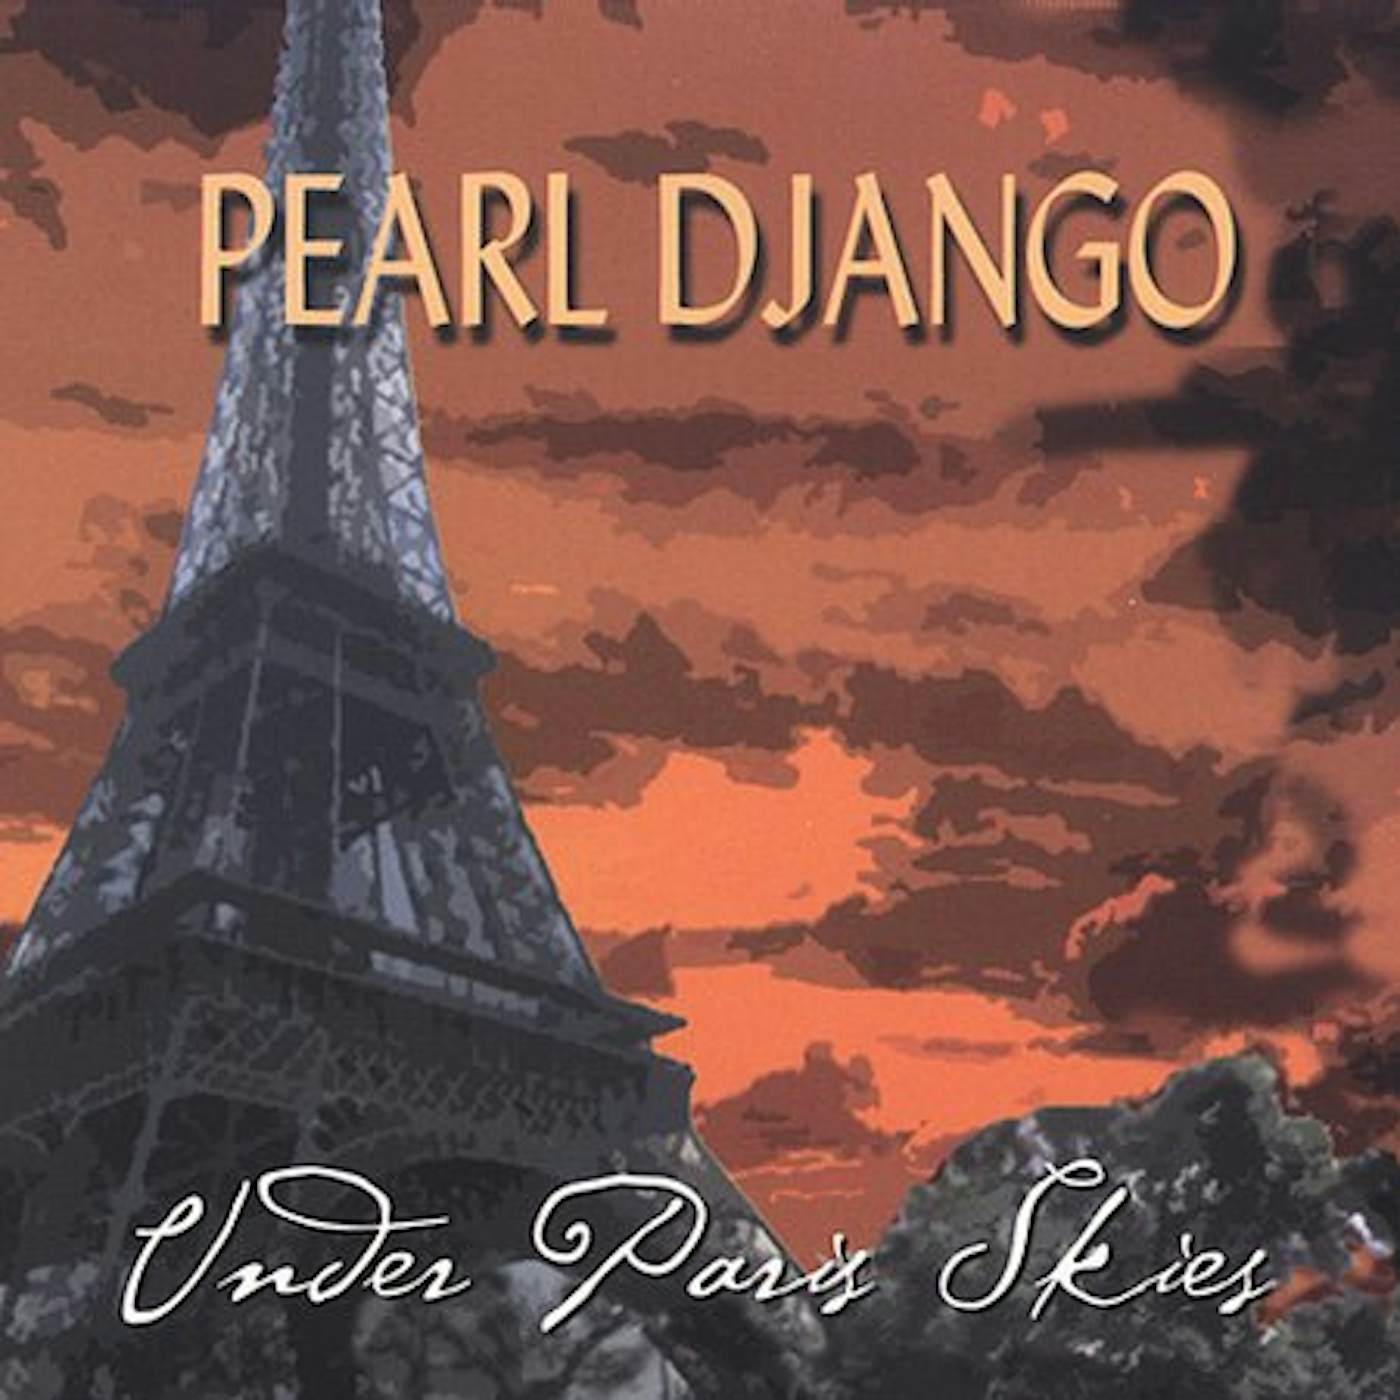 Pearl Django UNDER PARIS SKIES CD